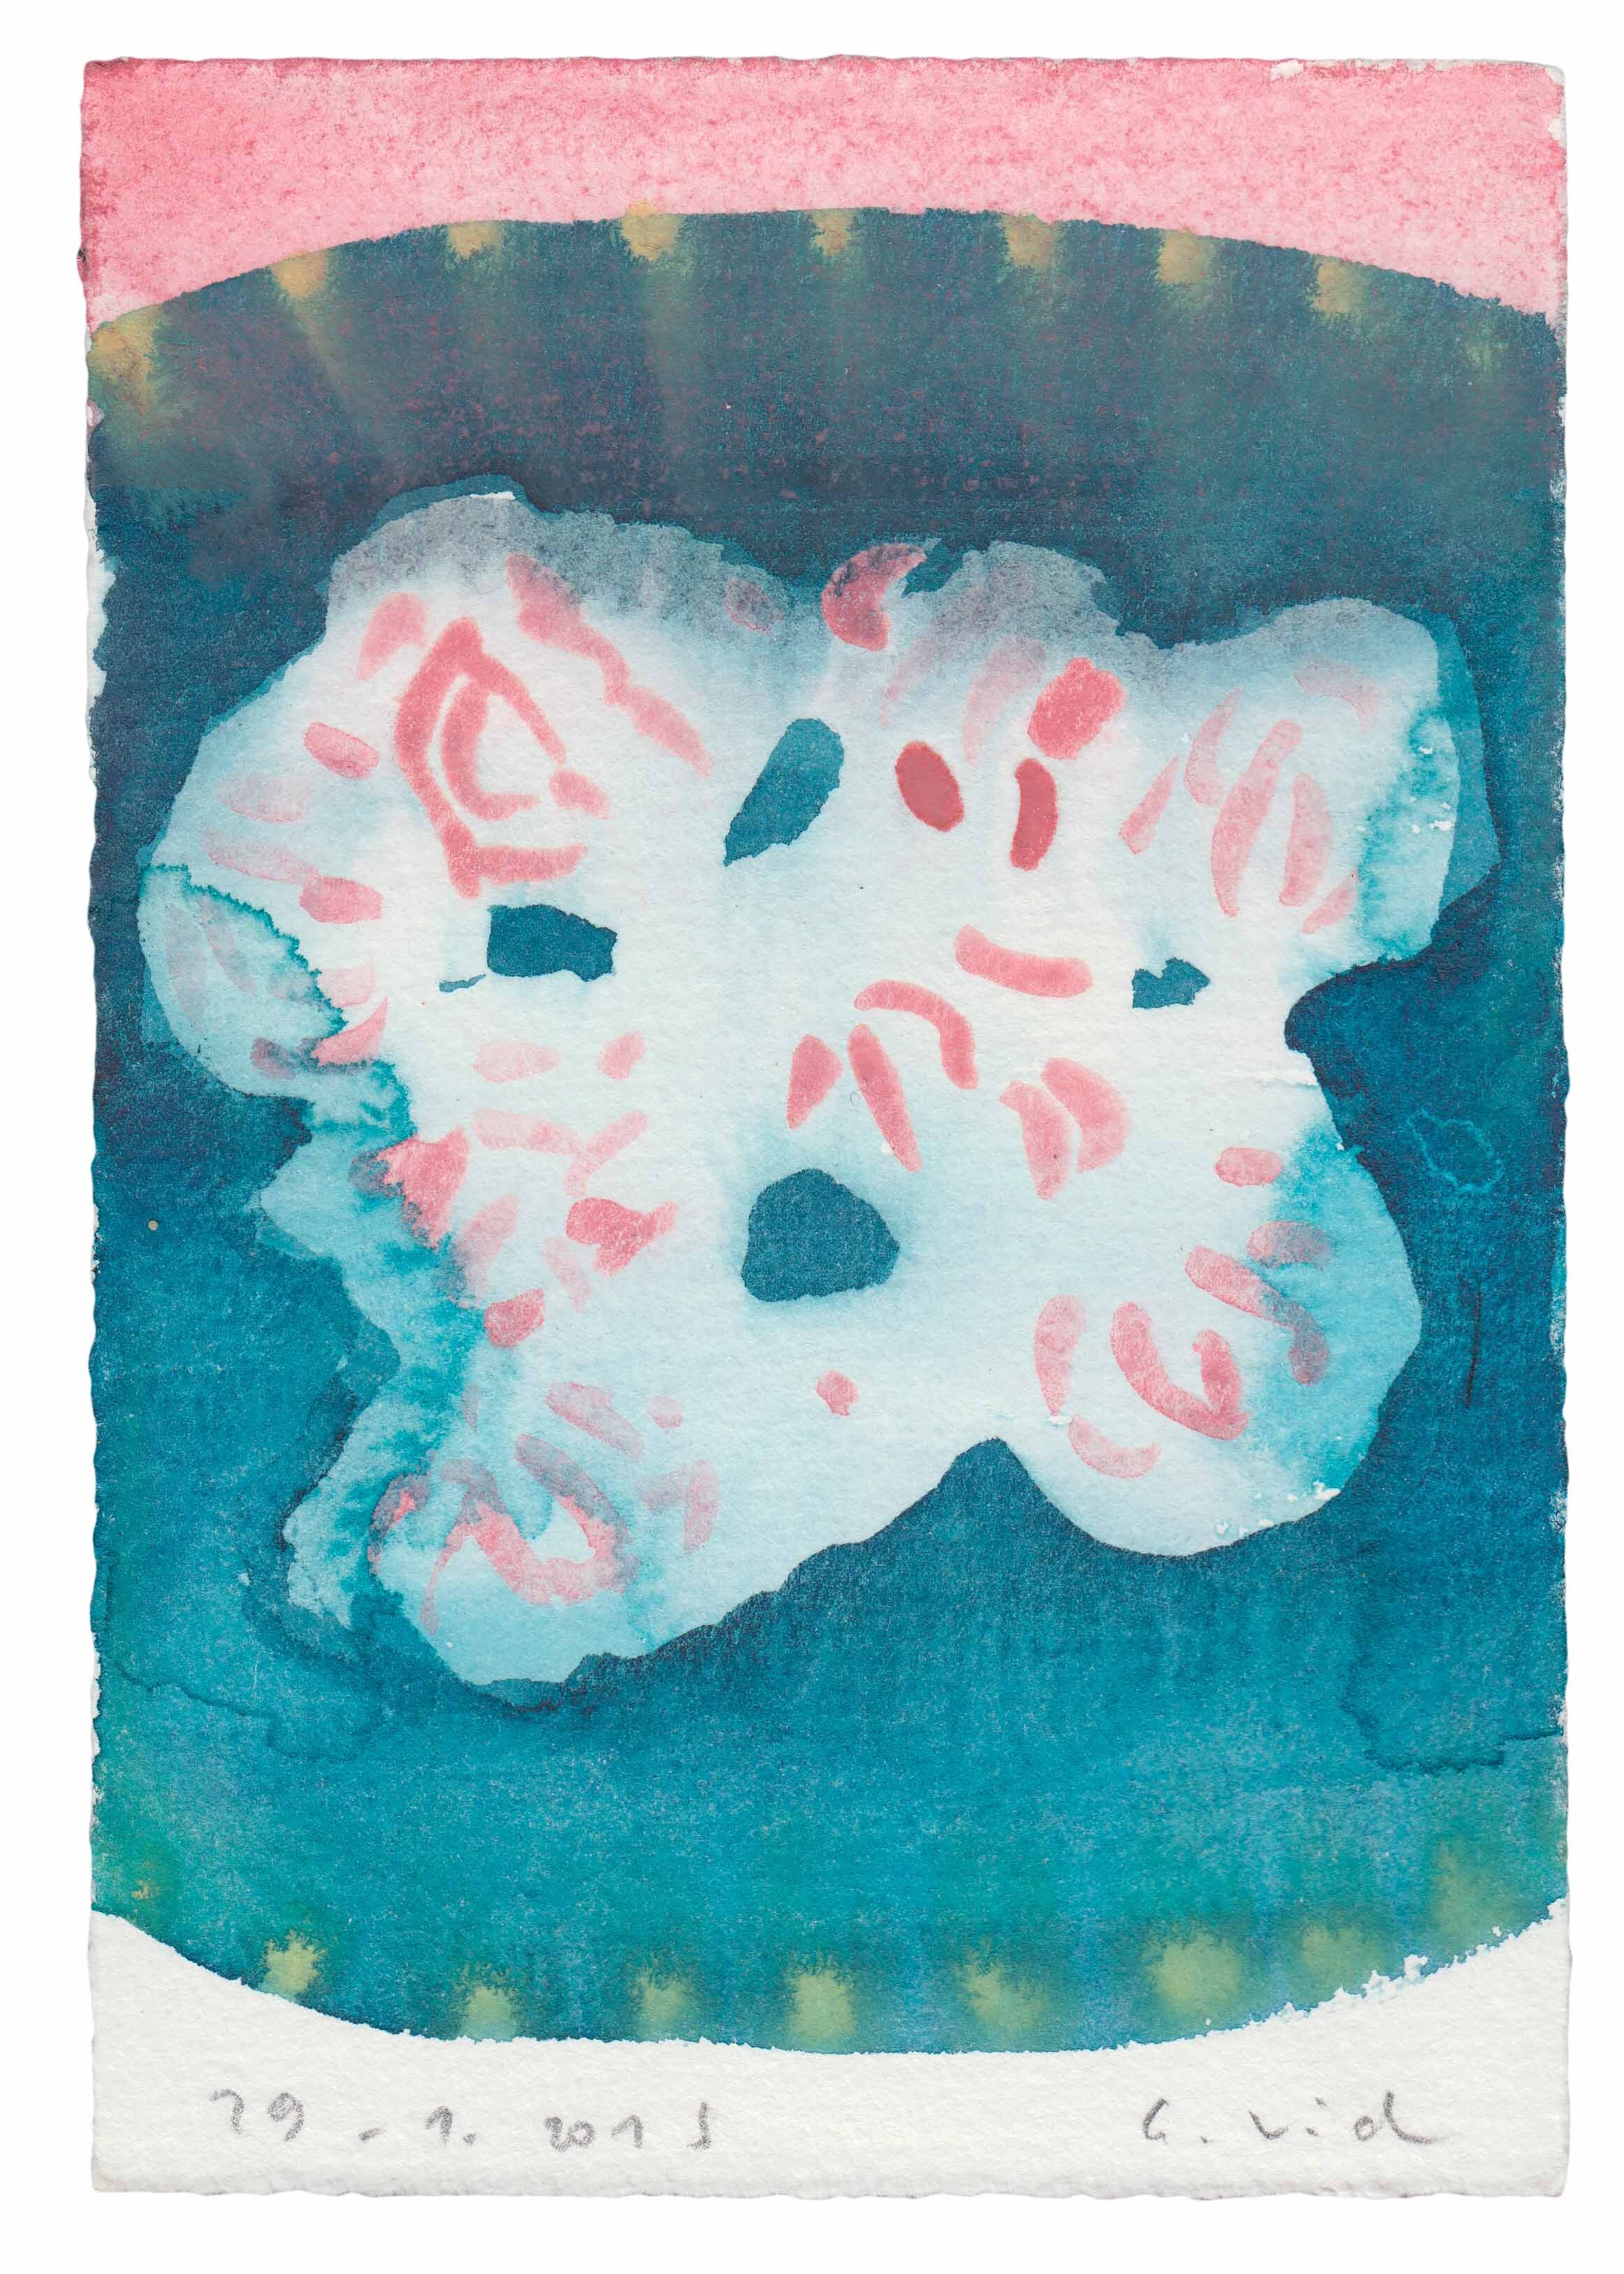  13 × 9 cm, Aquarell on Paper, 2015 